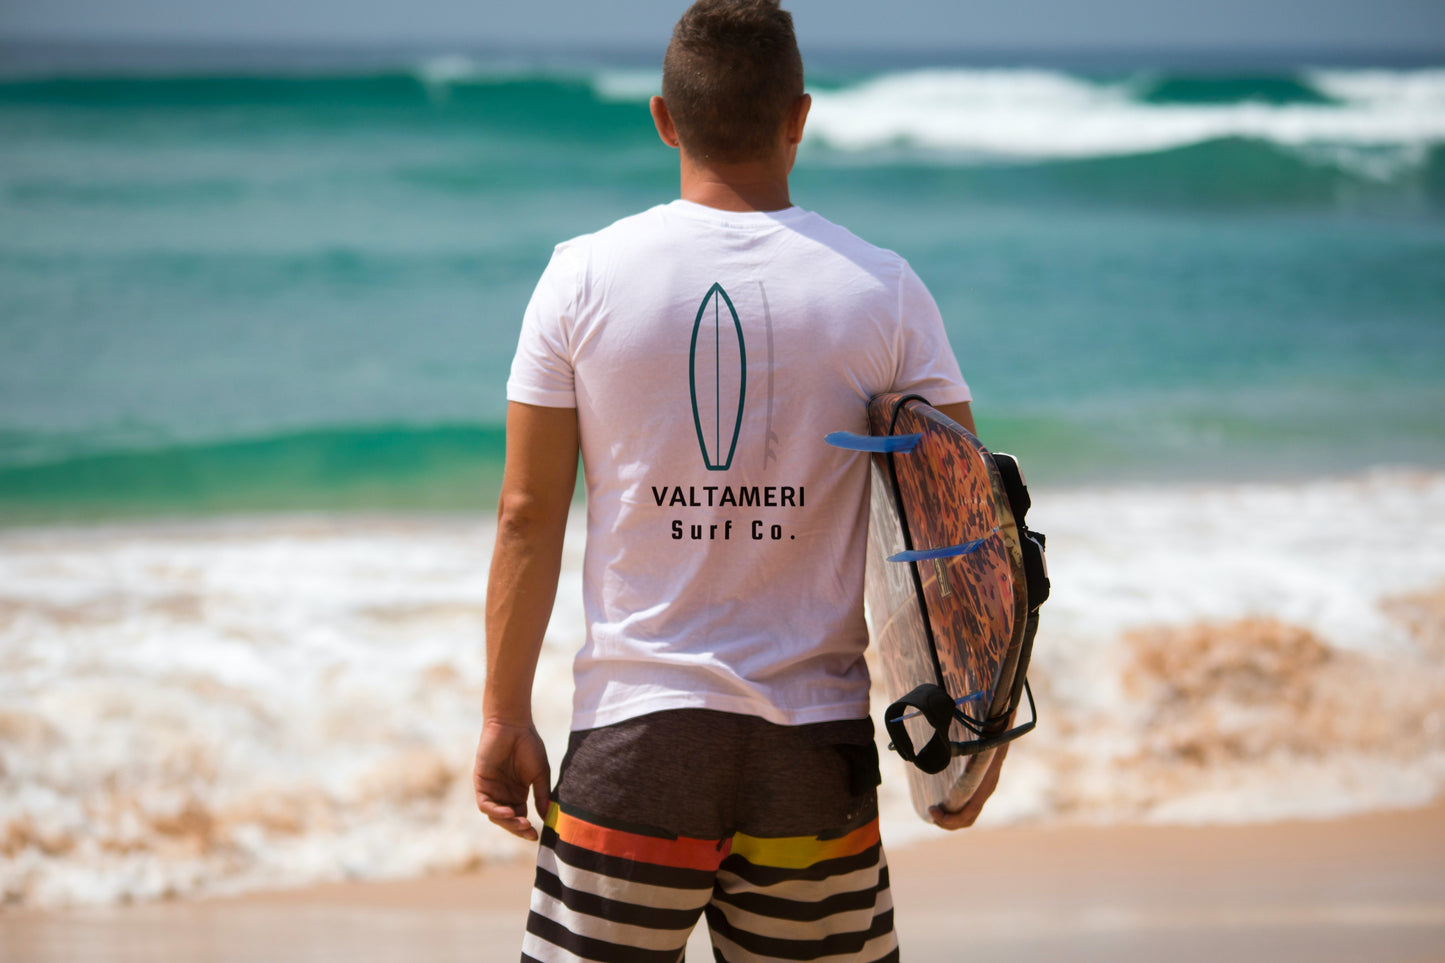 Valtameri Surf Co. White (Teal) Surfboard Shirt